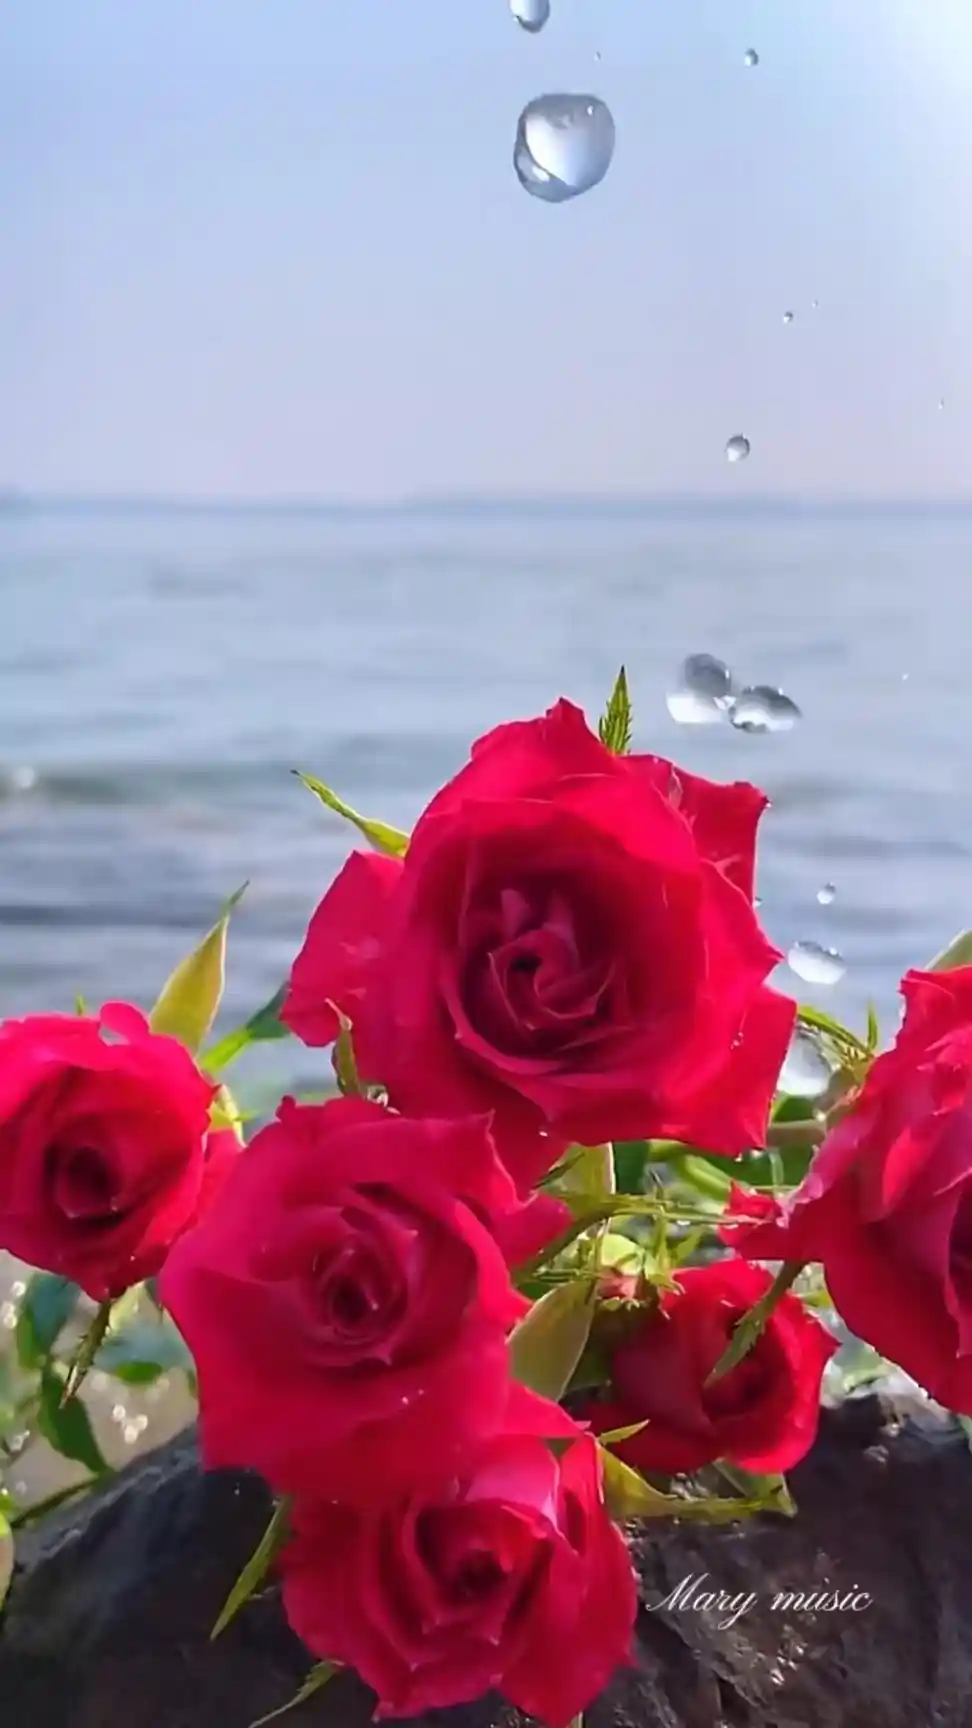 اجمل صور الورد